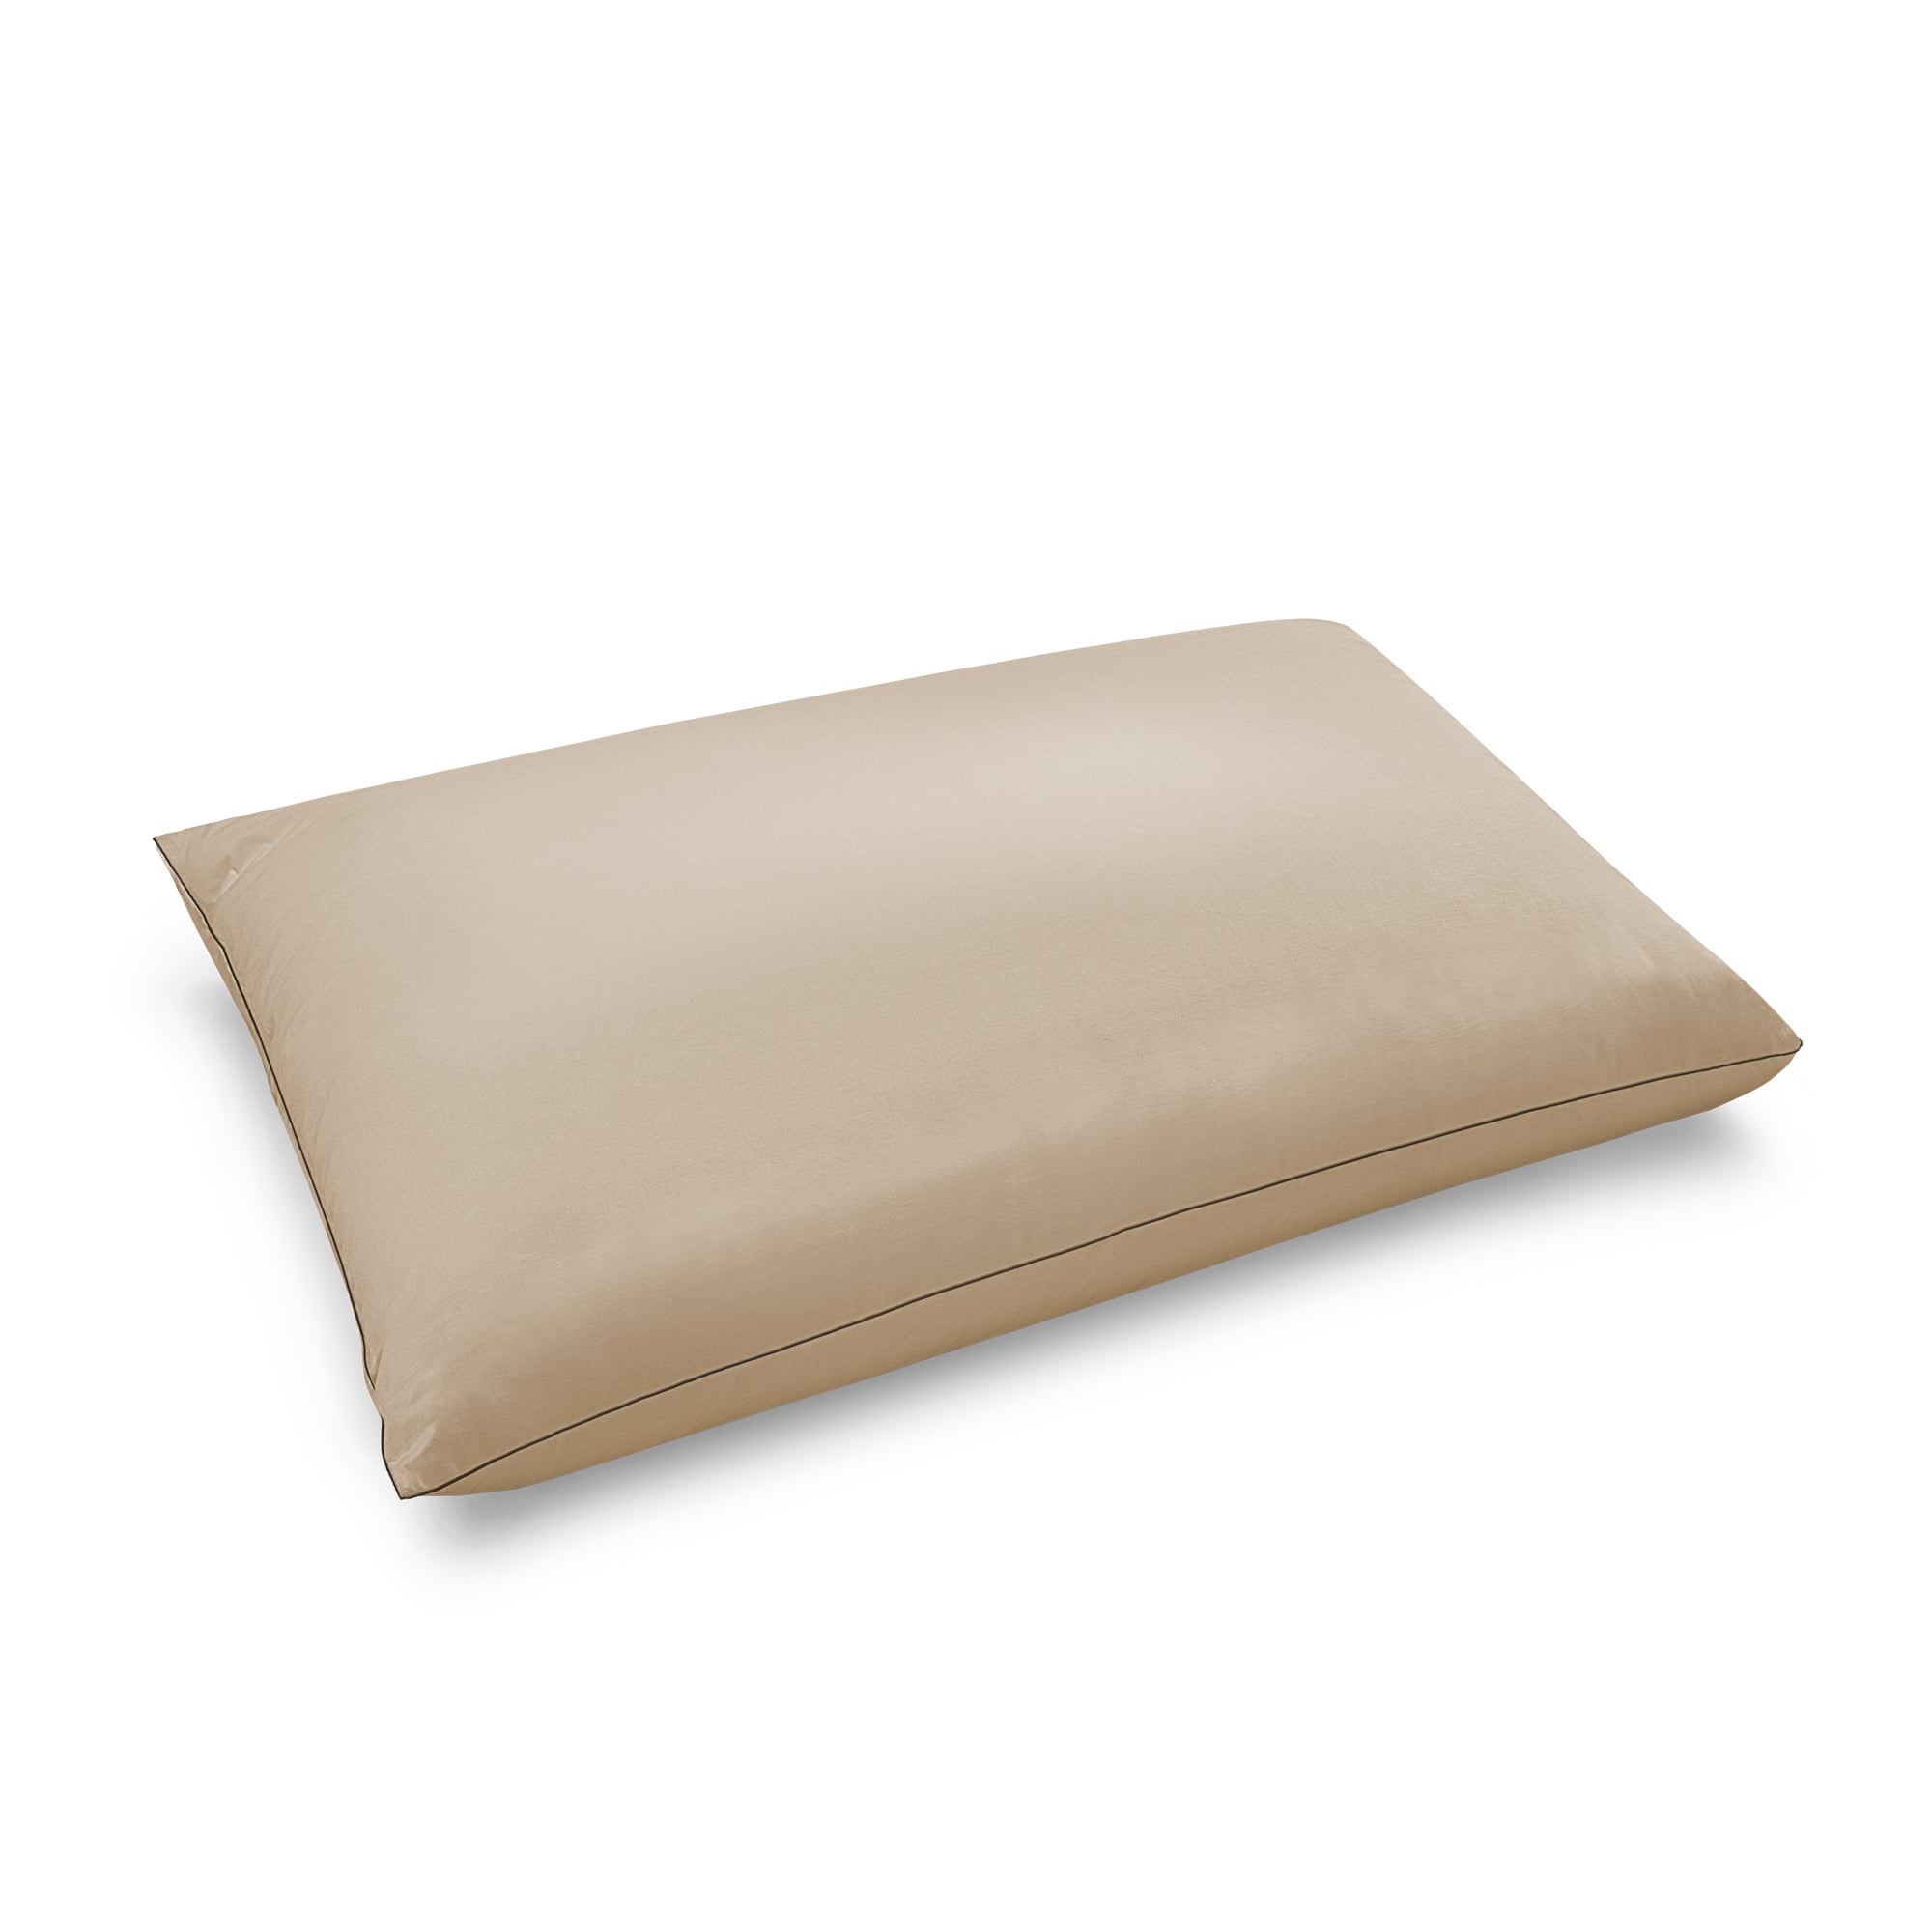 cupron pillow cases